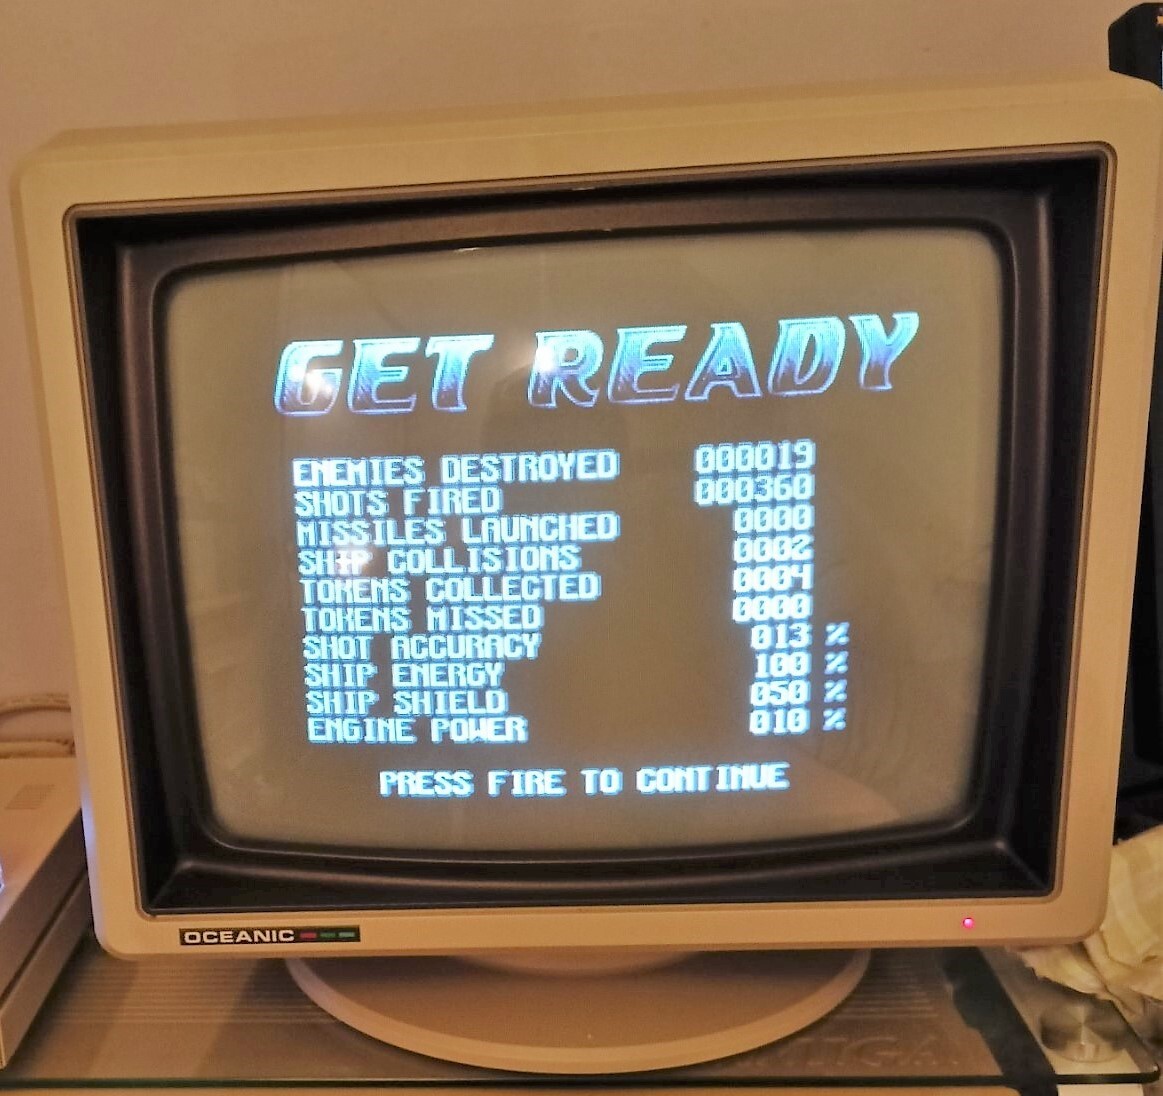  [Ech] Atari 1040STE / Amstrad CPC464 / Clone Gravis Ultrasound / Etc [Don] Carrosserie A500+ HS / Ecran Atari SC1435 HS 96q8